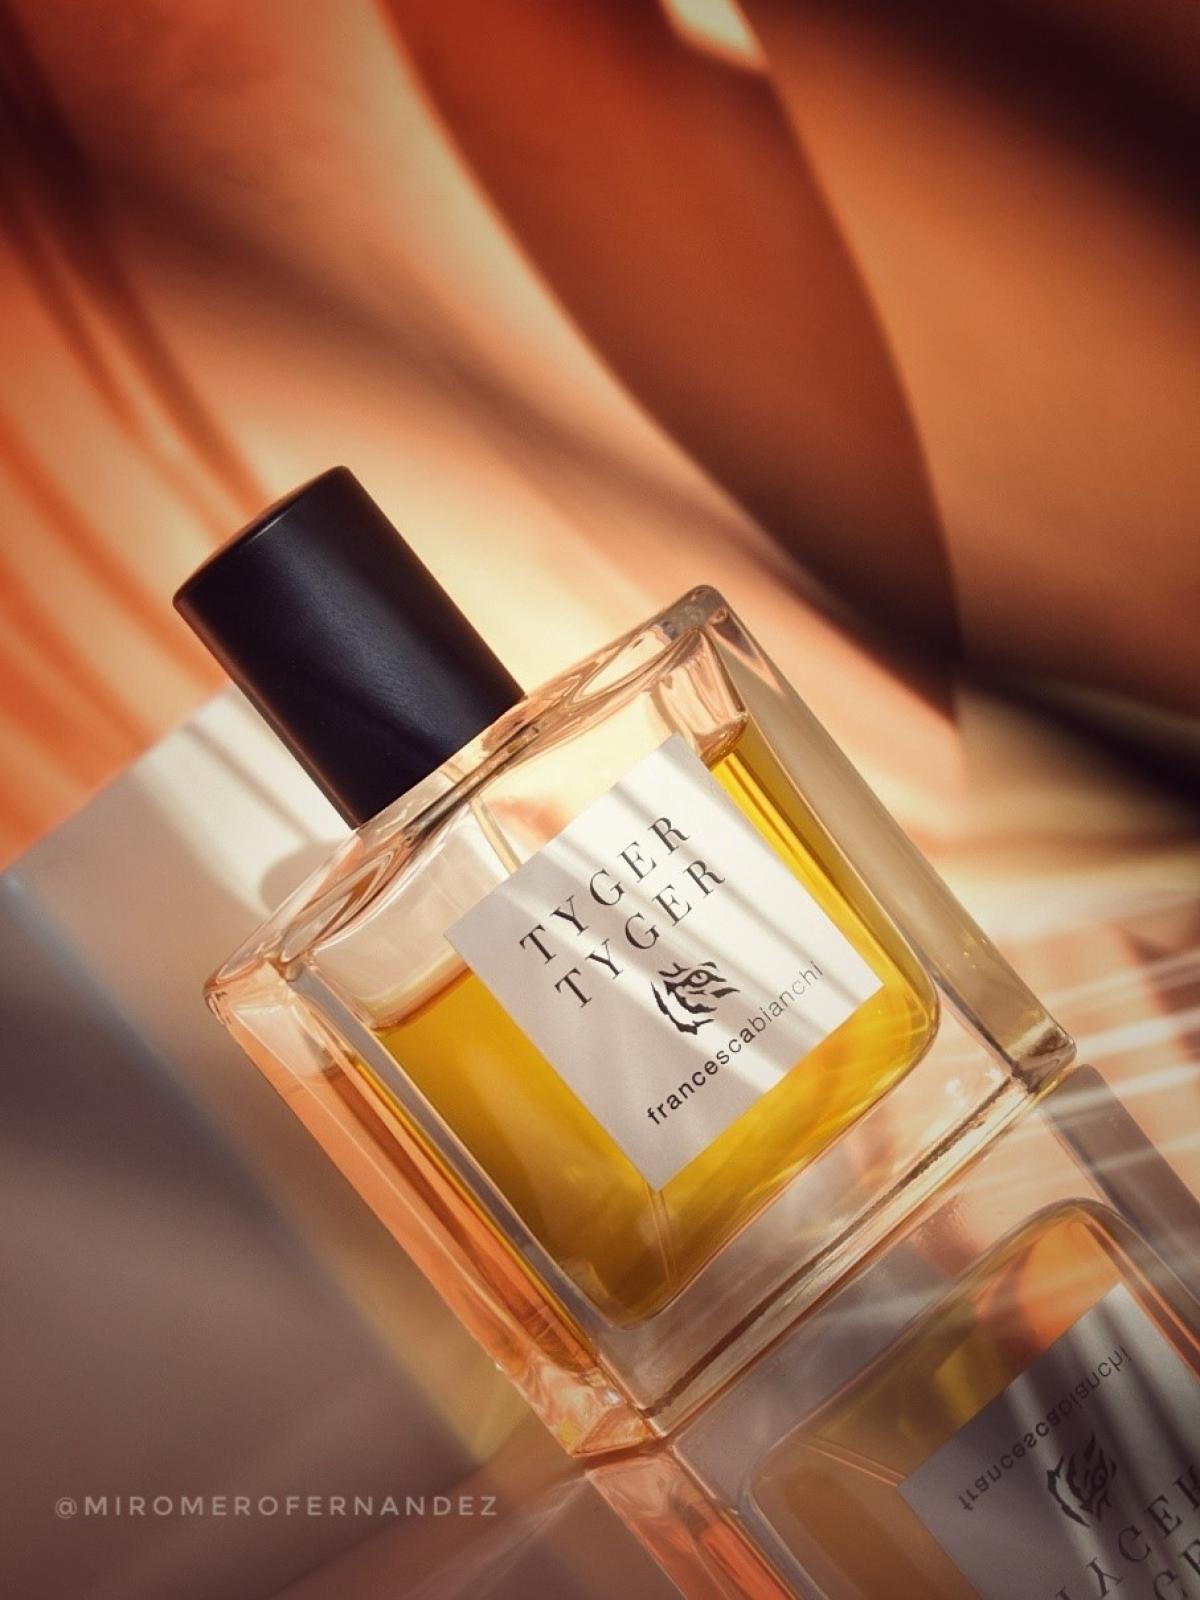 Tyger Tyger Francesca Bianchi perfume - a fragrance for women and men 2020